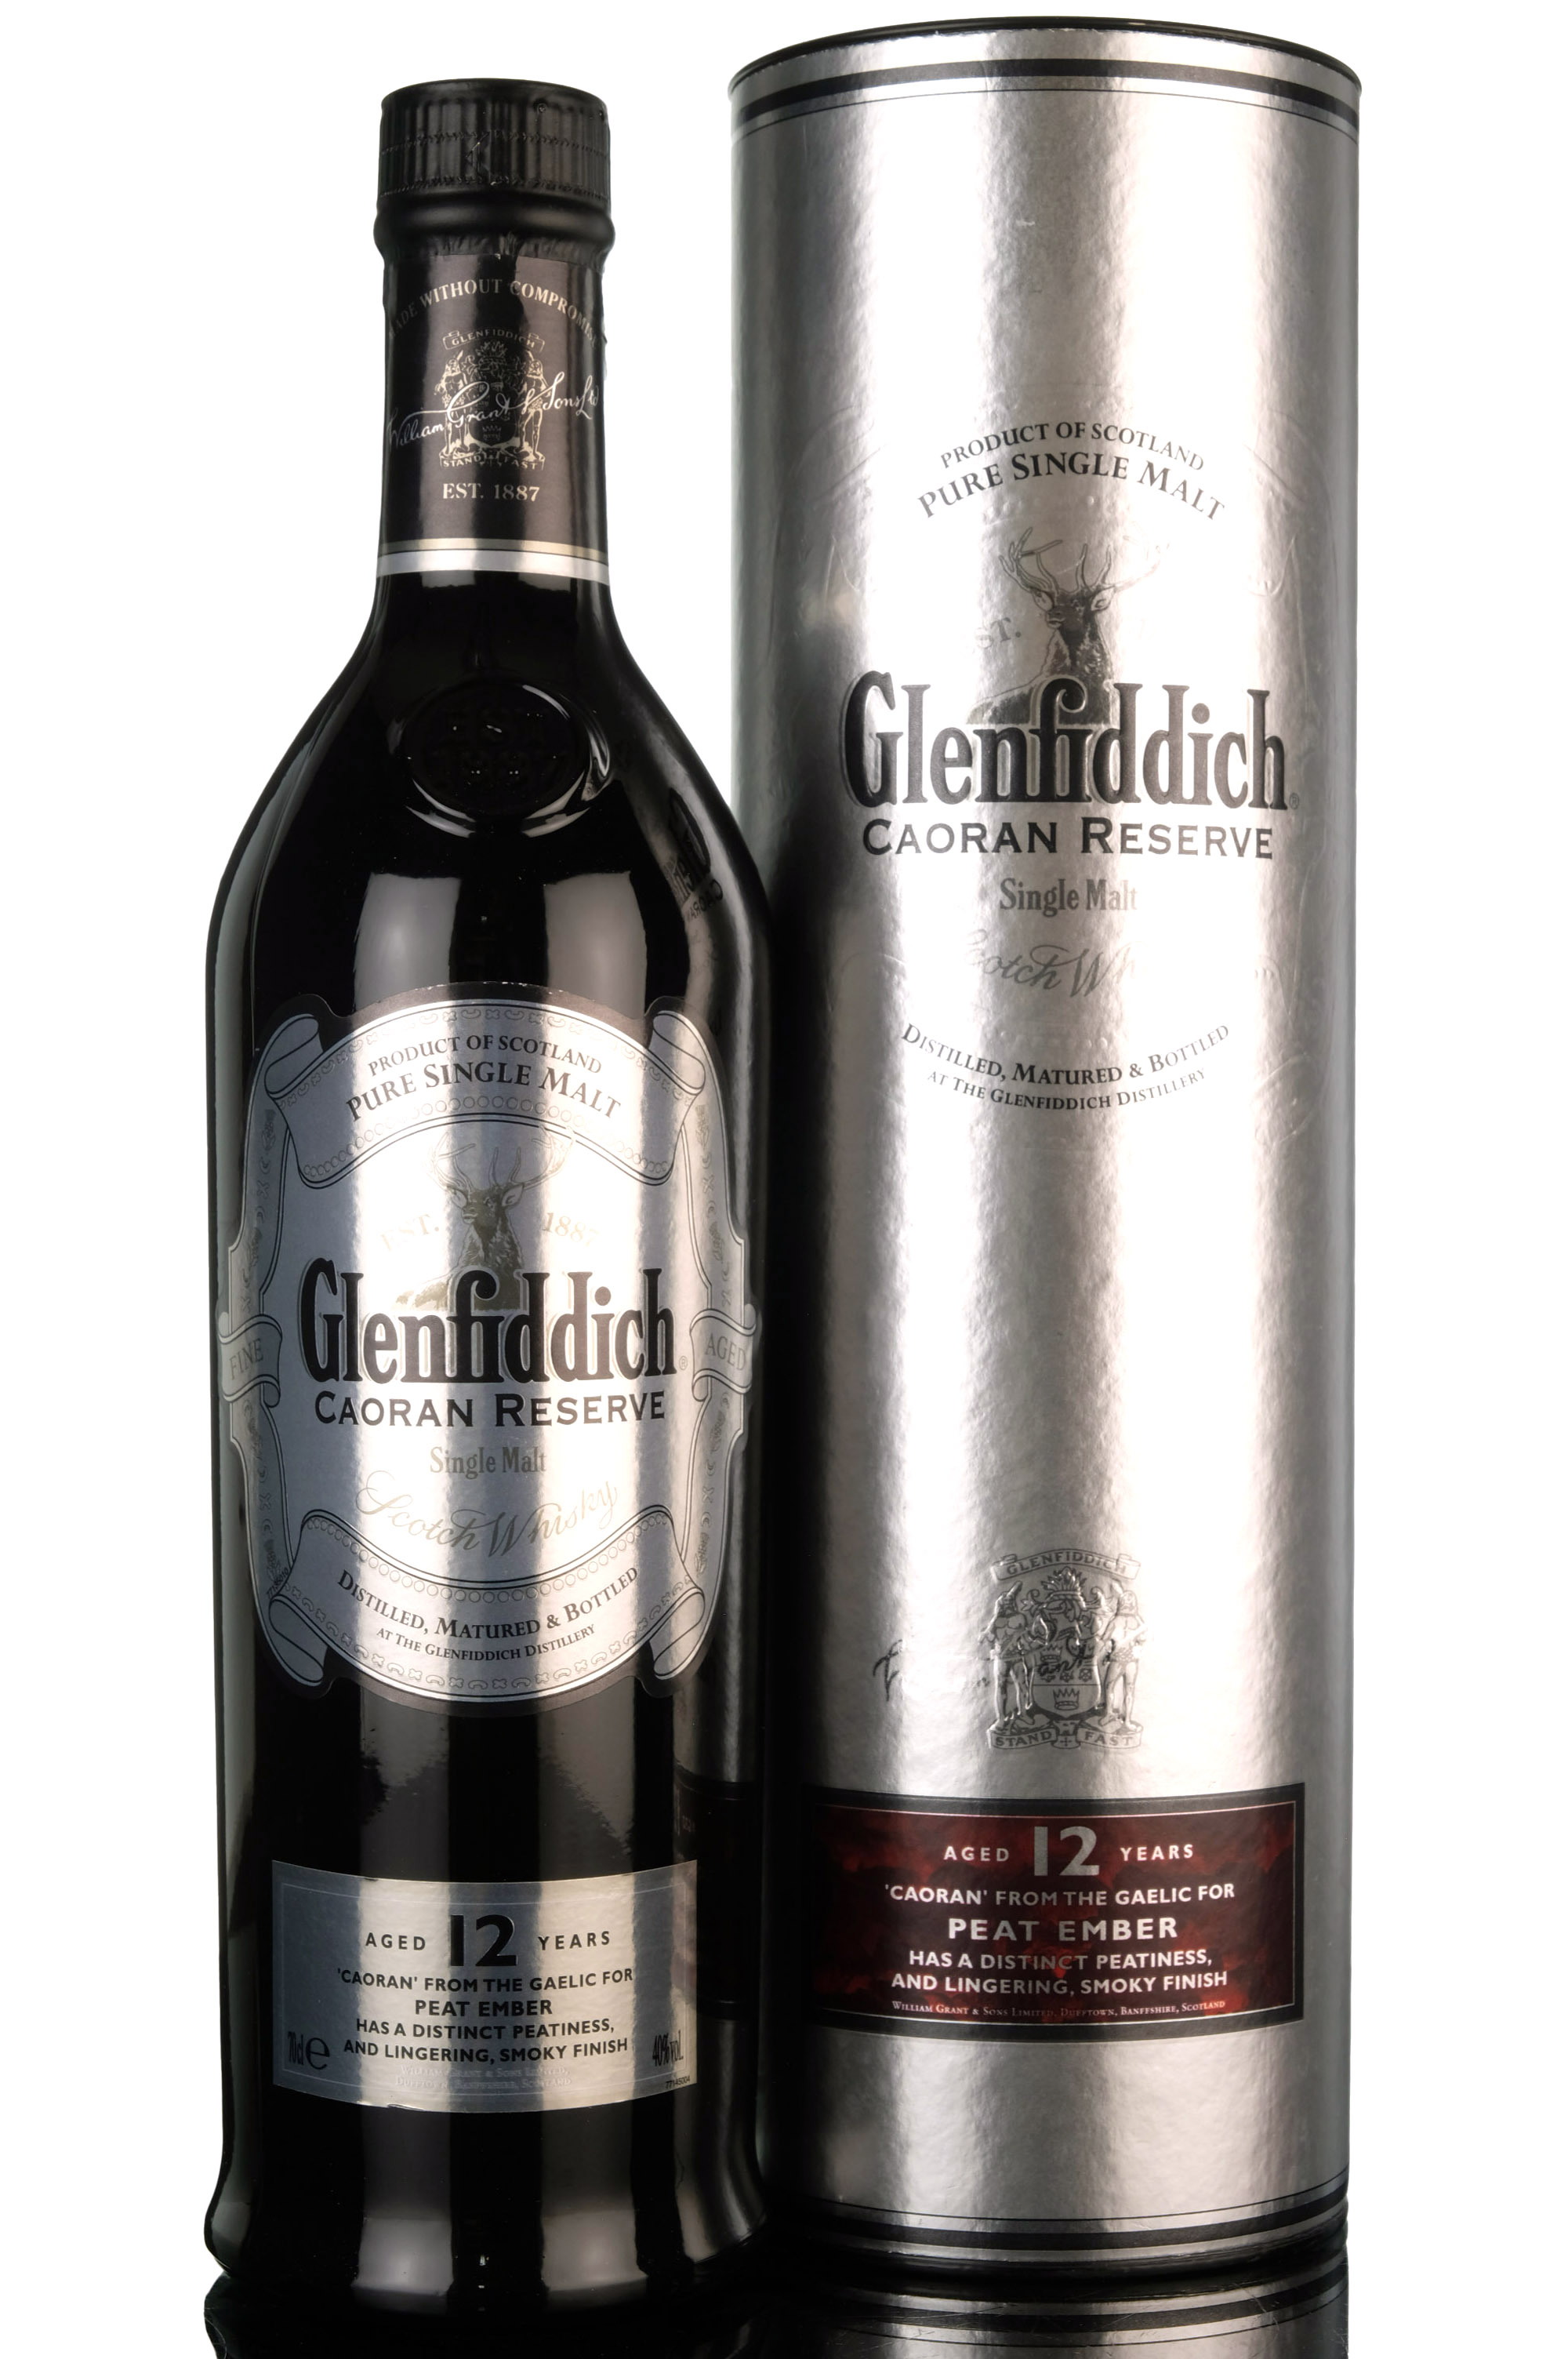 Glenfiddich 12 Year Old - Caoran Reserve - Peat Ember - 2005 Release